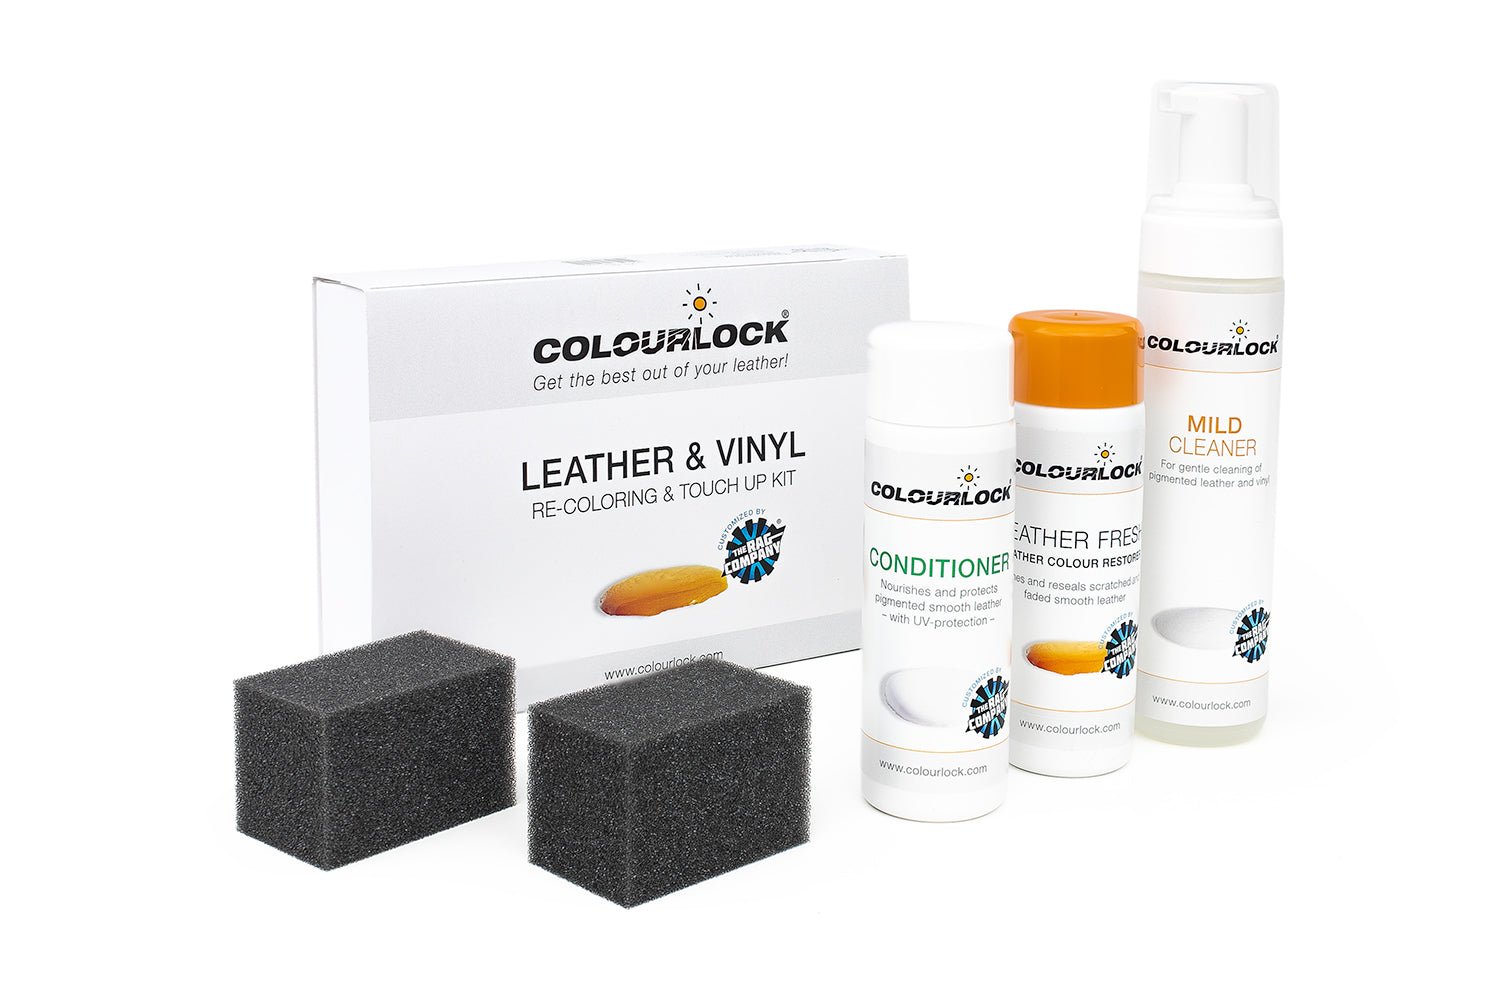 Who are Colourlock Leather Care ?